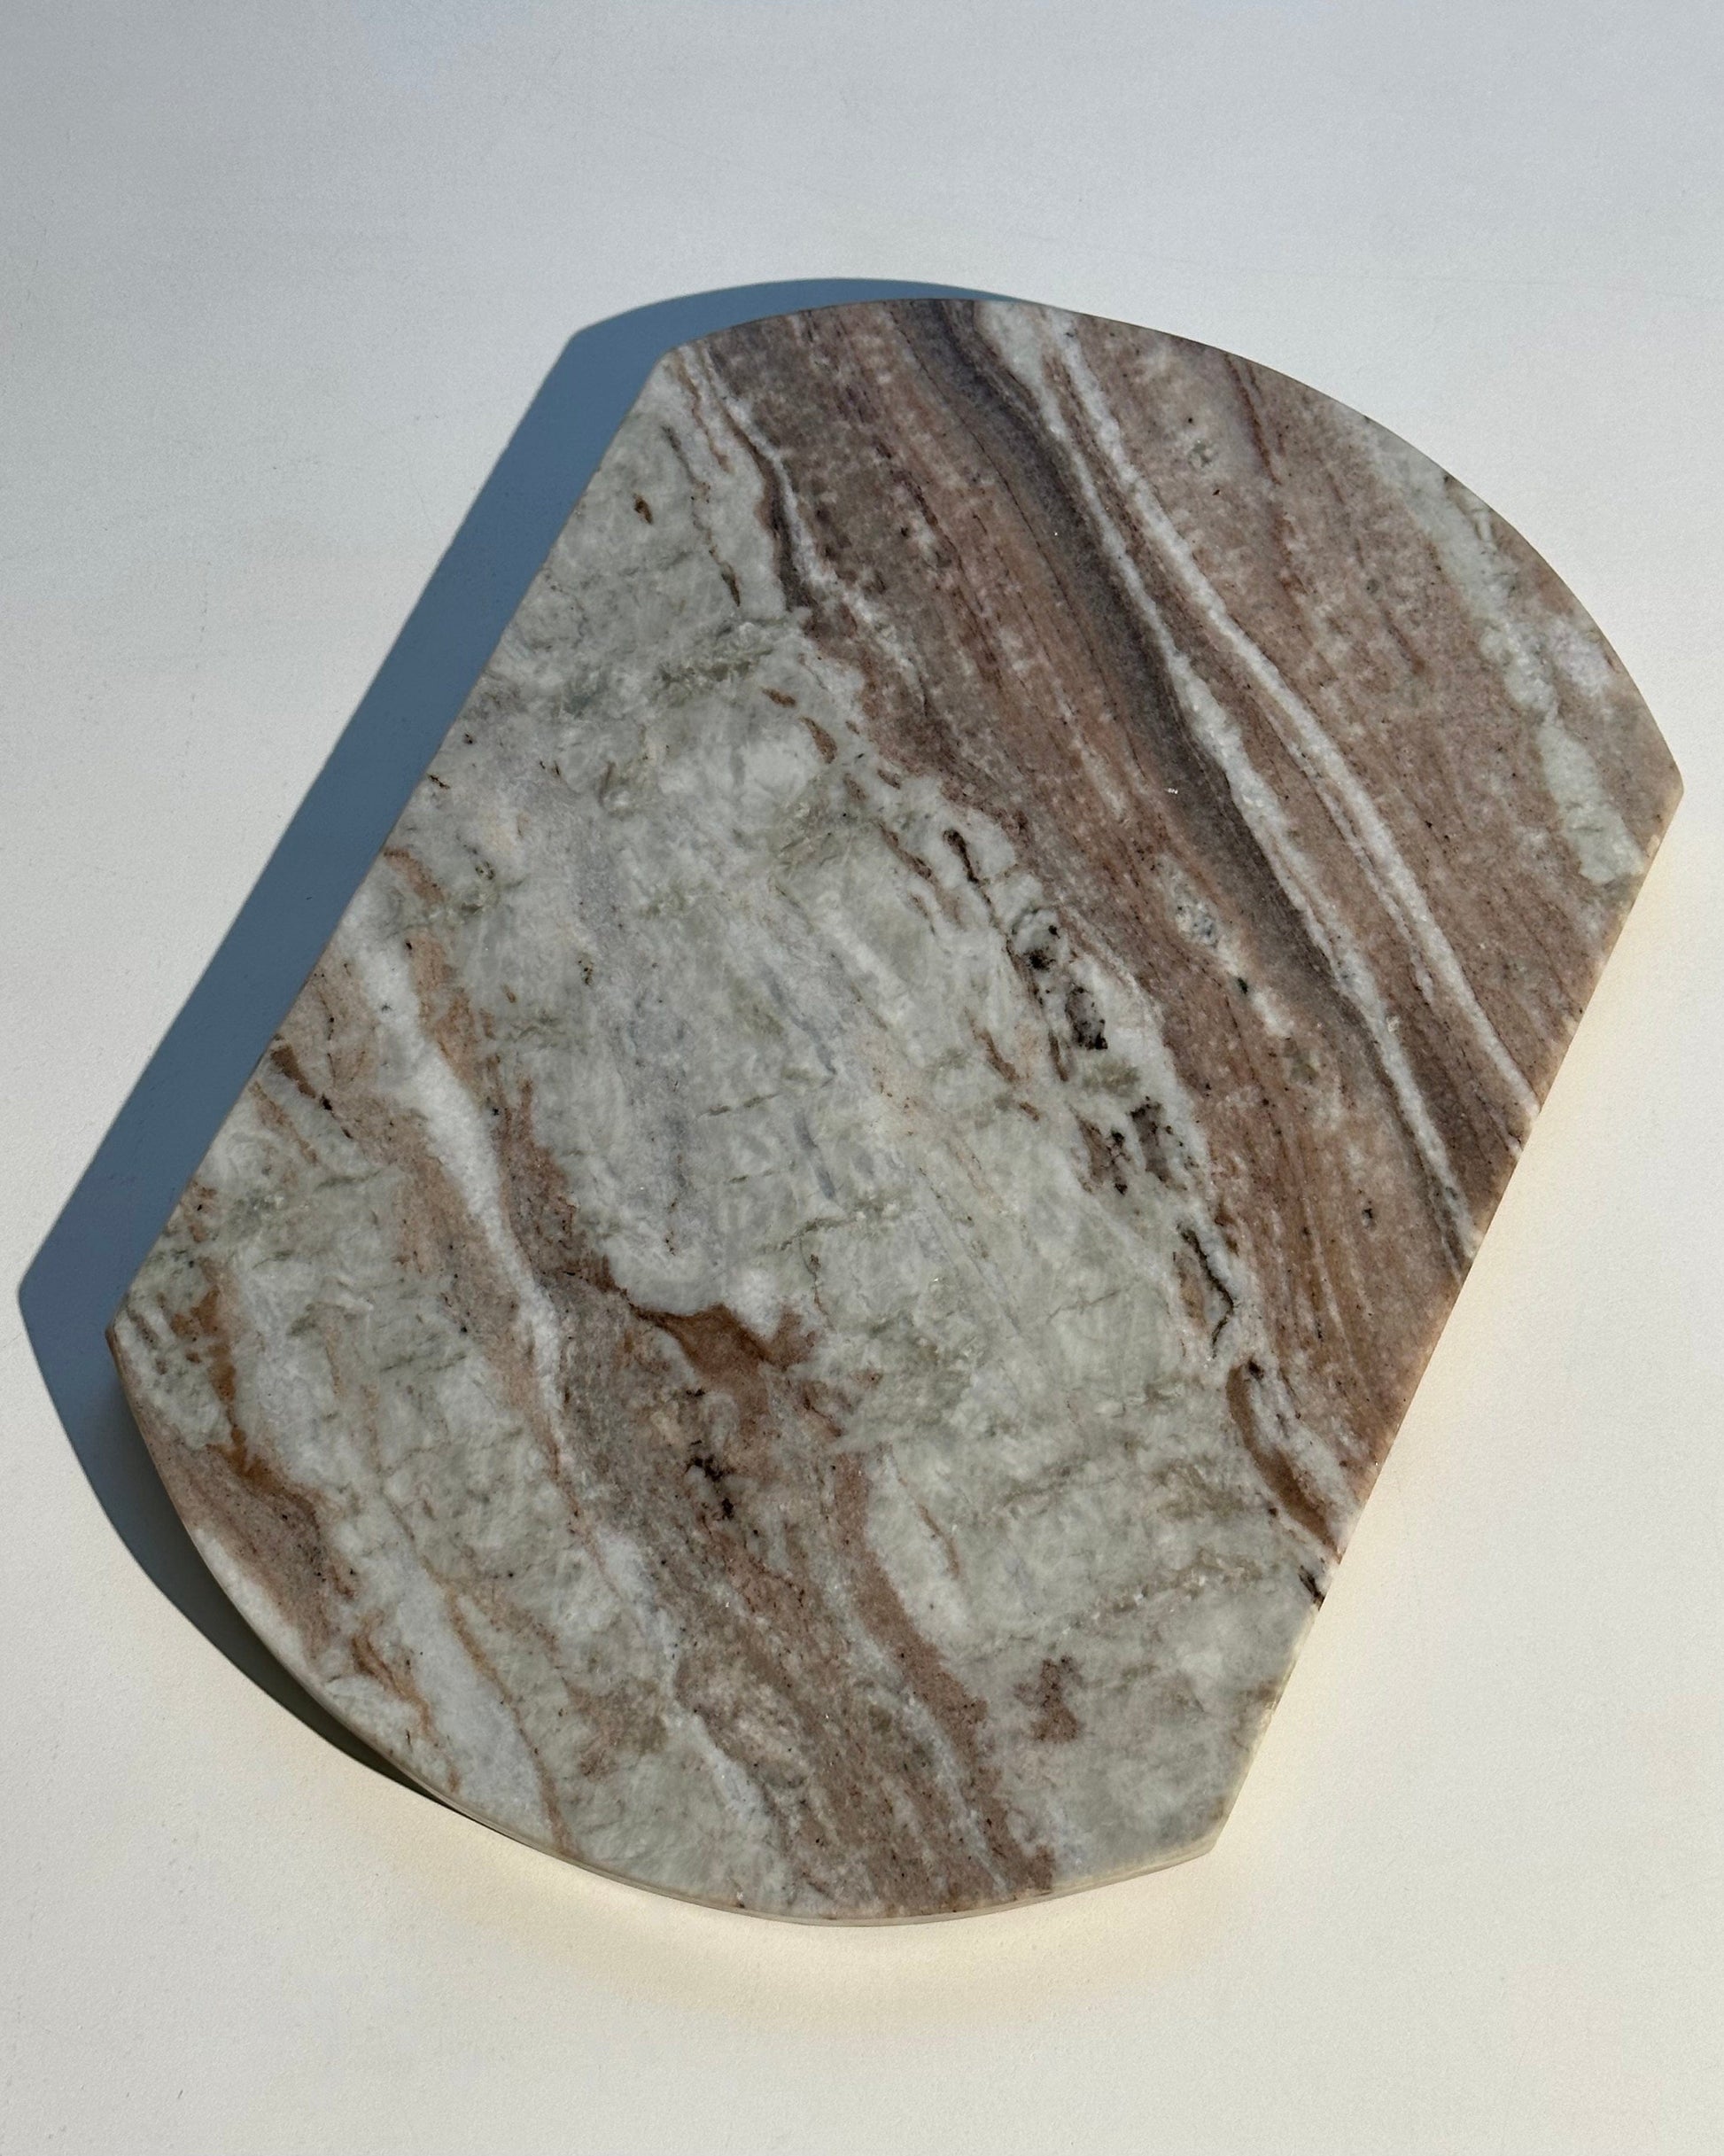 Bellari Home Tray Organic Stone Marble Charcuterie Board